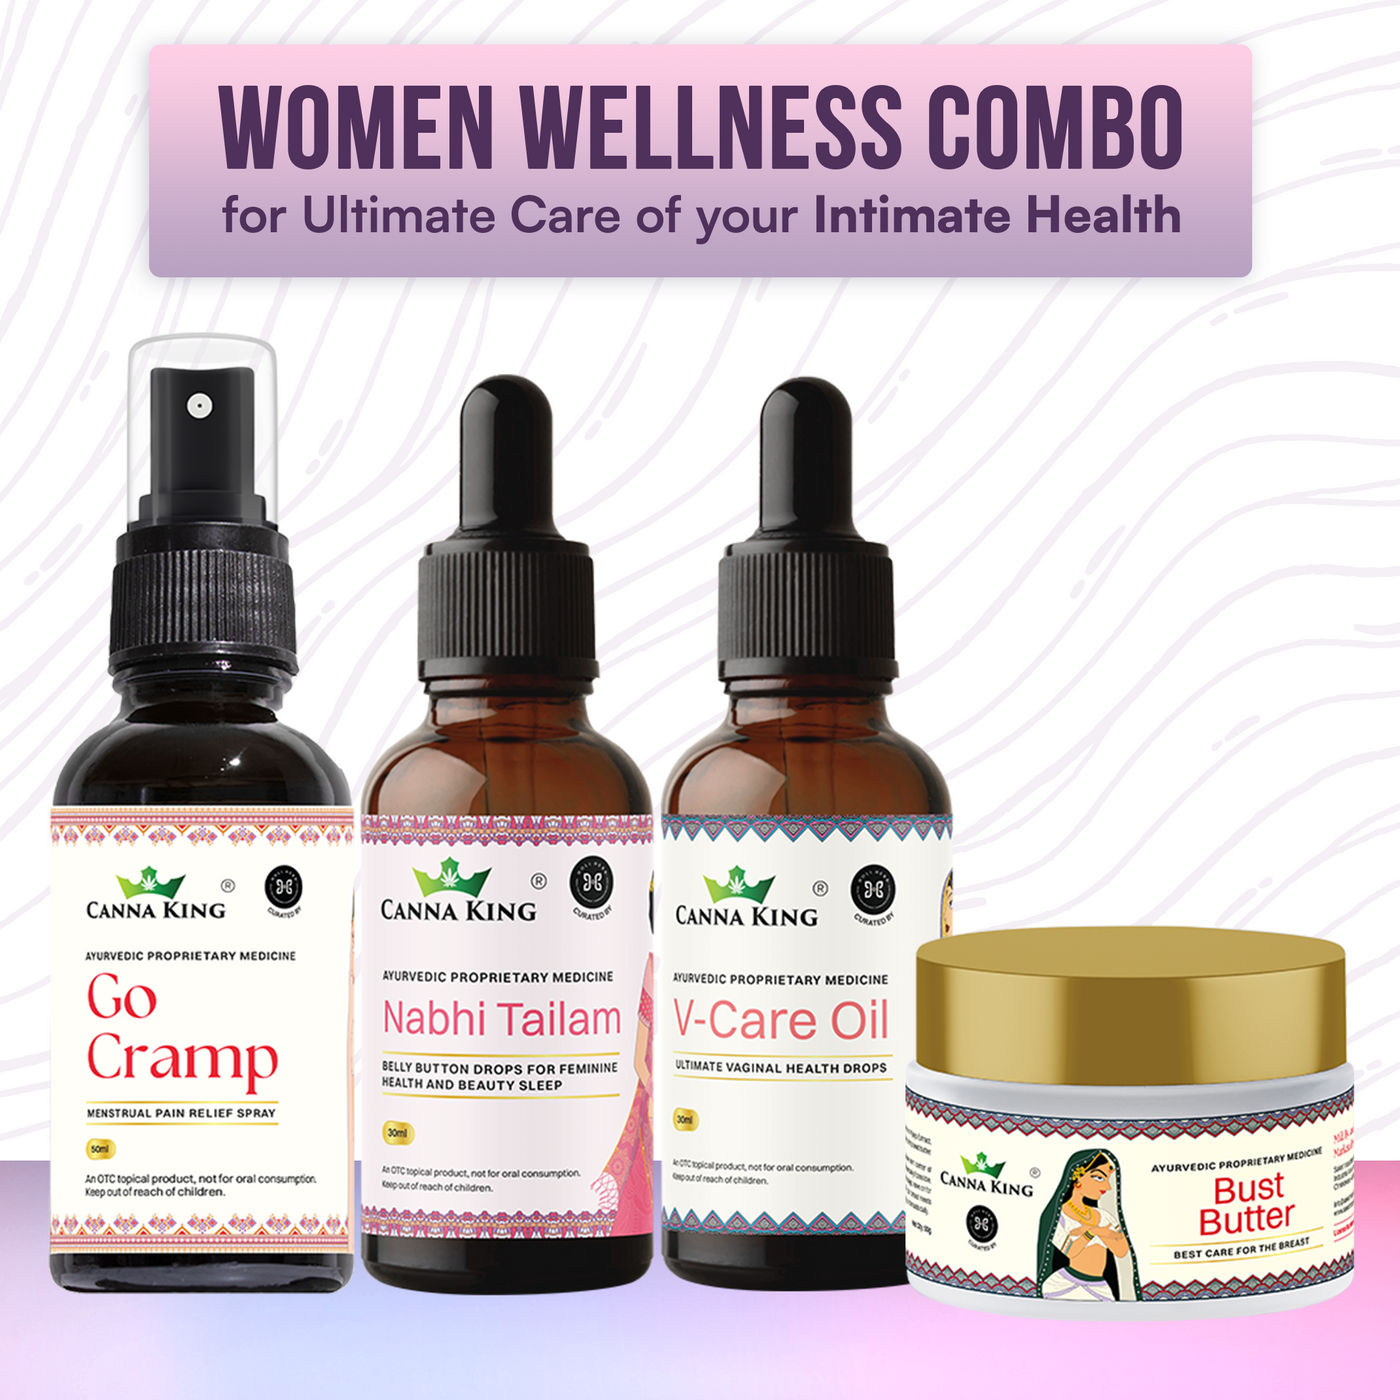 Cannaking Ultimate Women Wellness Combo- Nabhi Tailam, Go- Cramp, V-Care Oil, Bust Butter